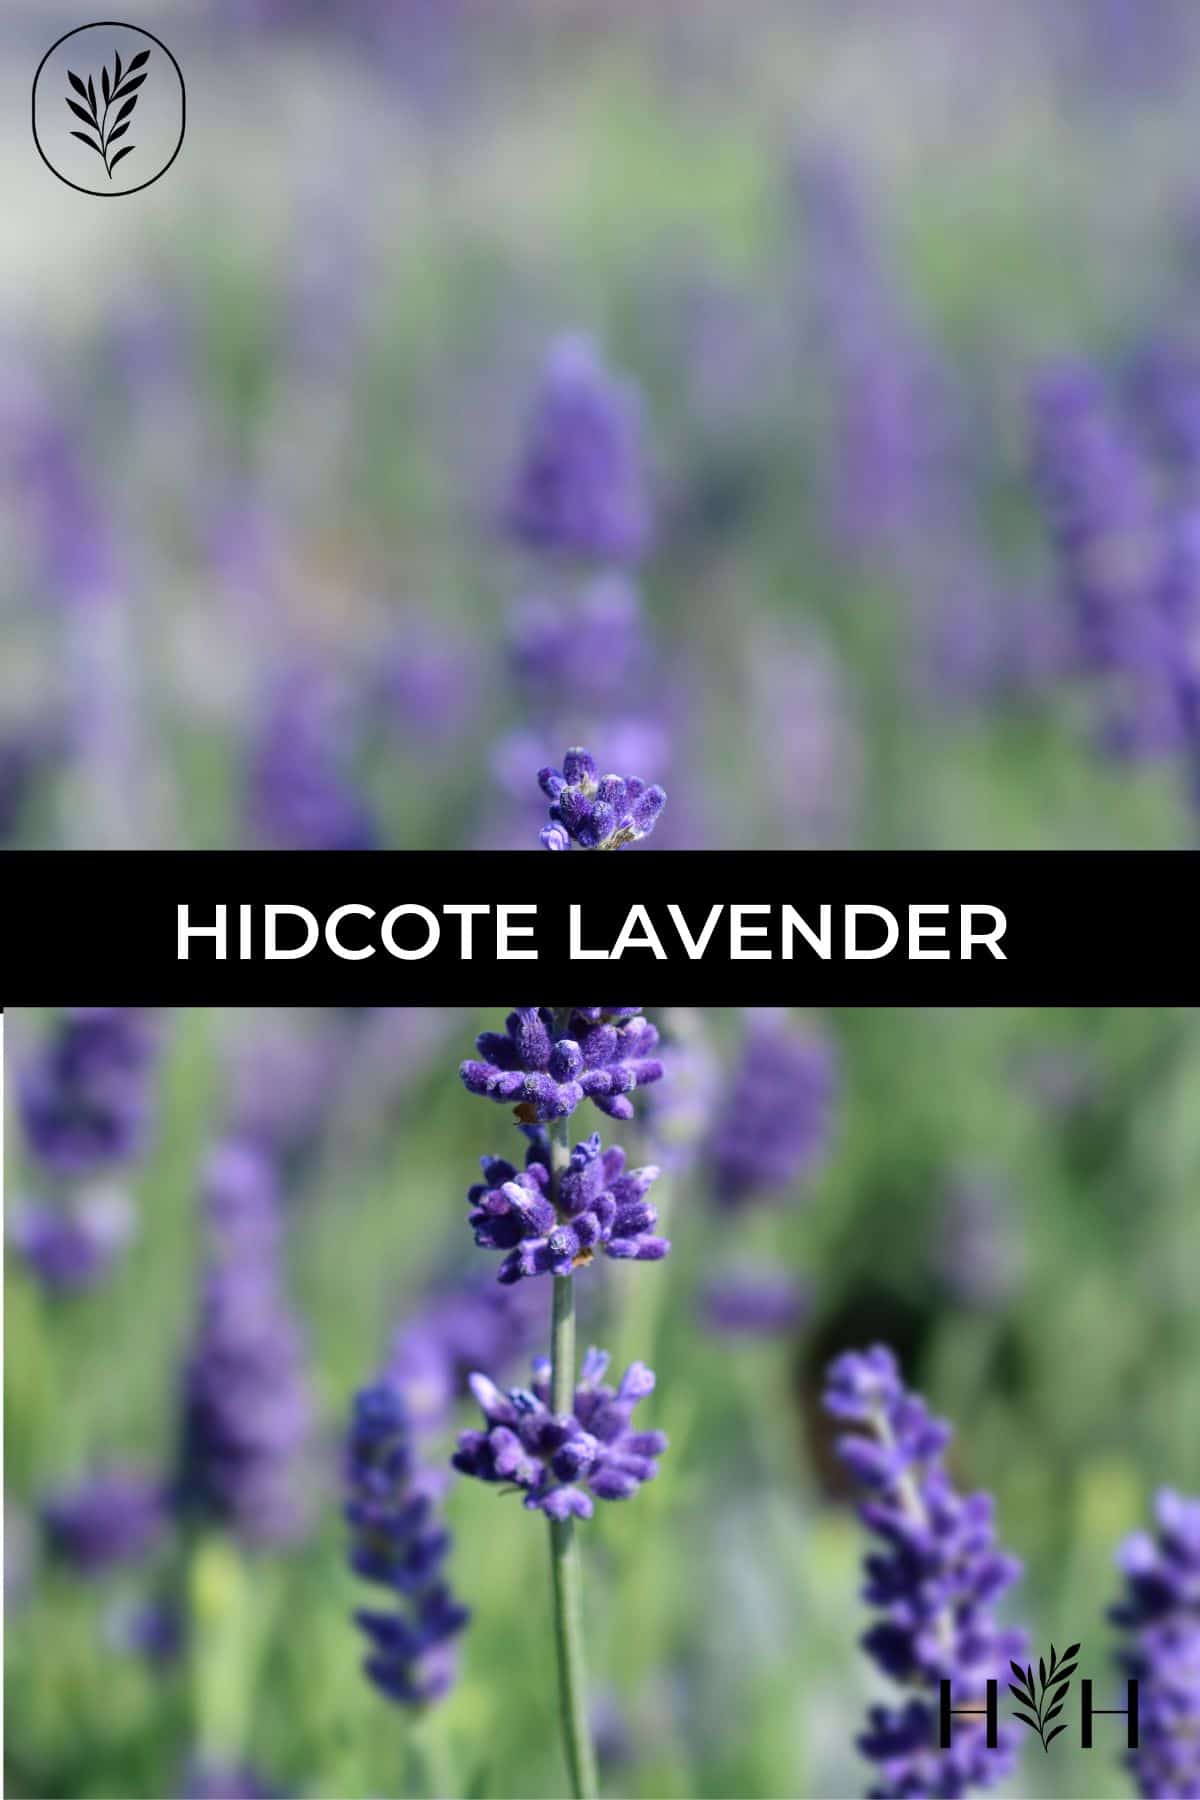 Hidcote lavender via @home4theharvest